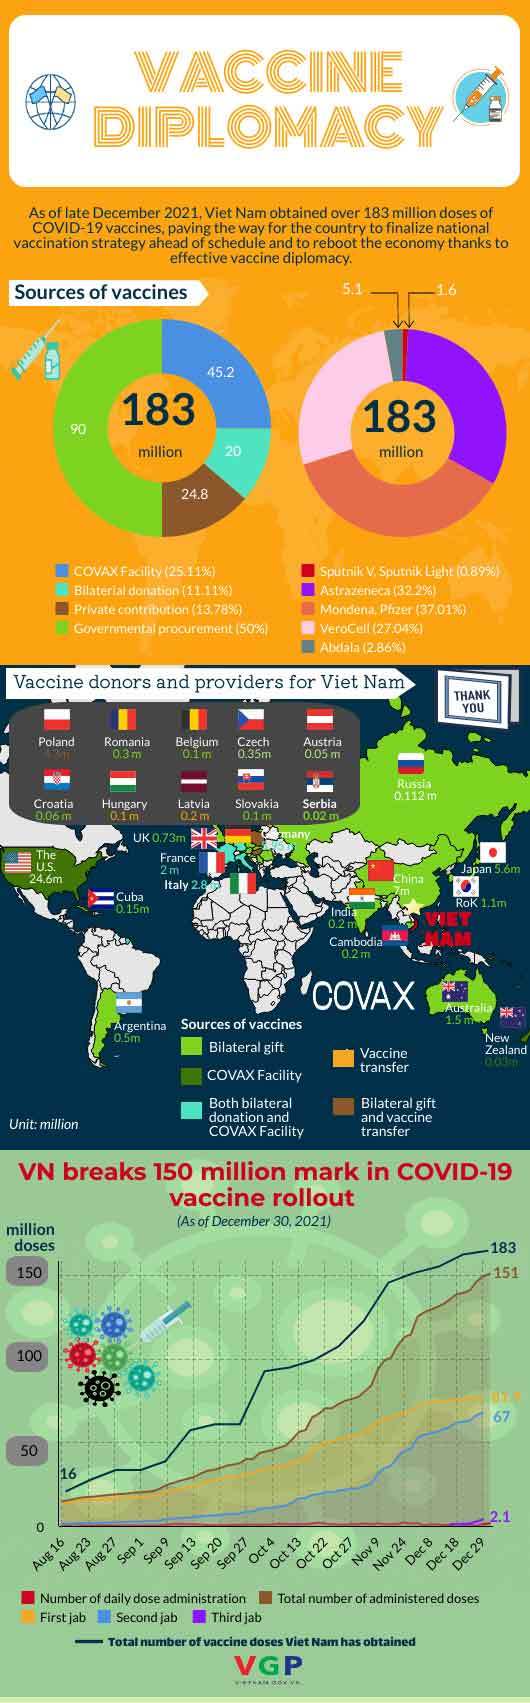 Vaccine diplomacy – key to achieve herd immunity ahead of schedule